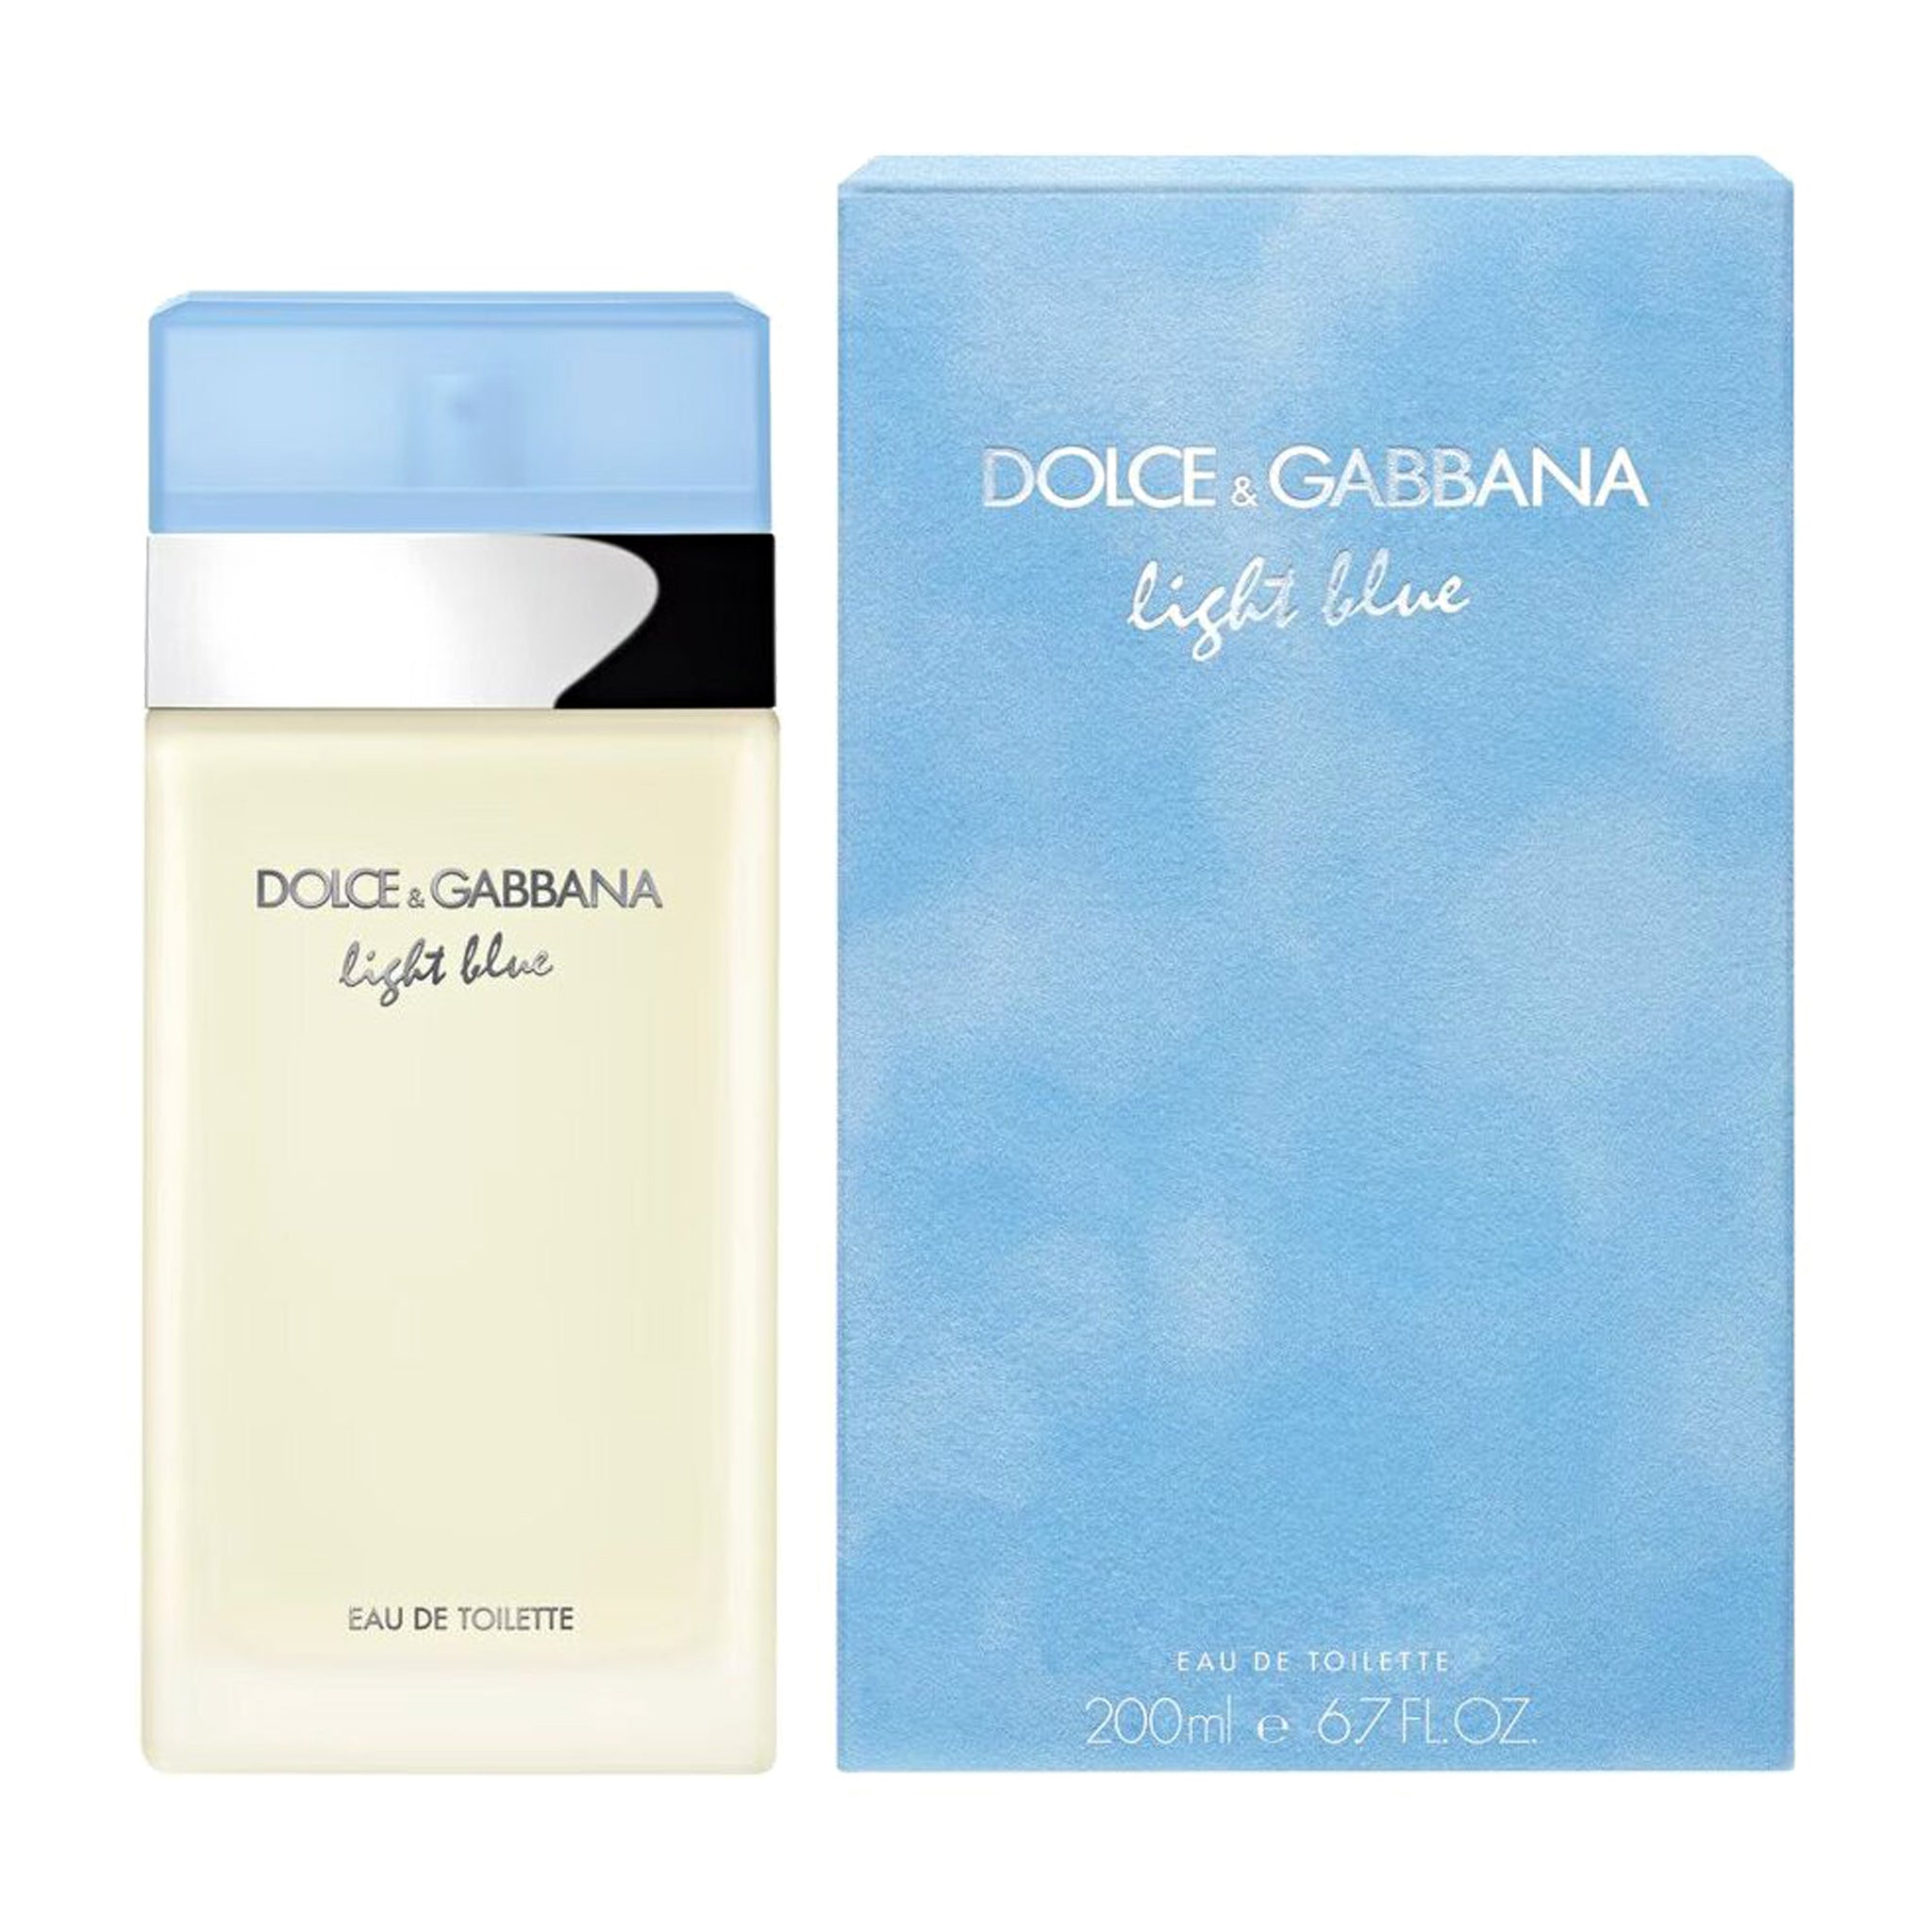 Dolce & Gabbana Light Blue eau intense And Vince Camuto